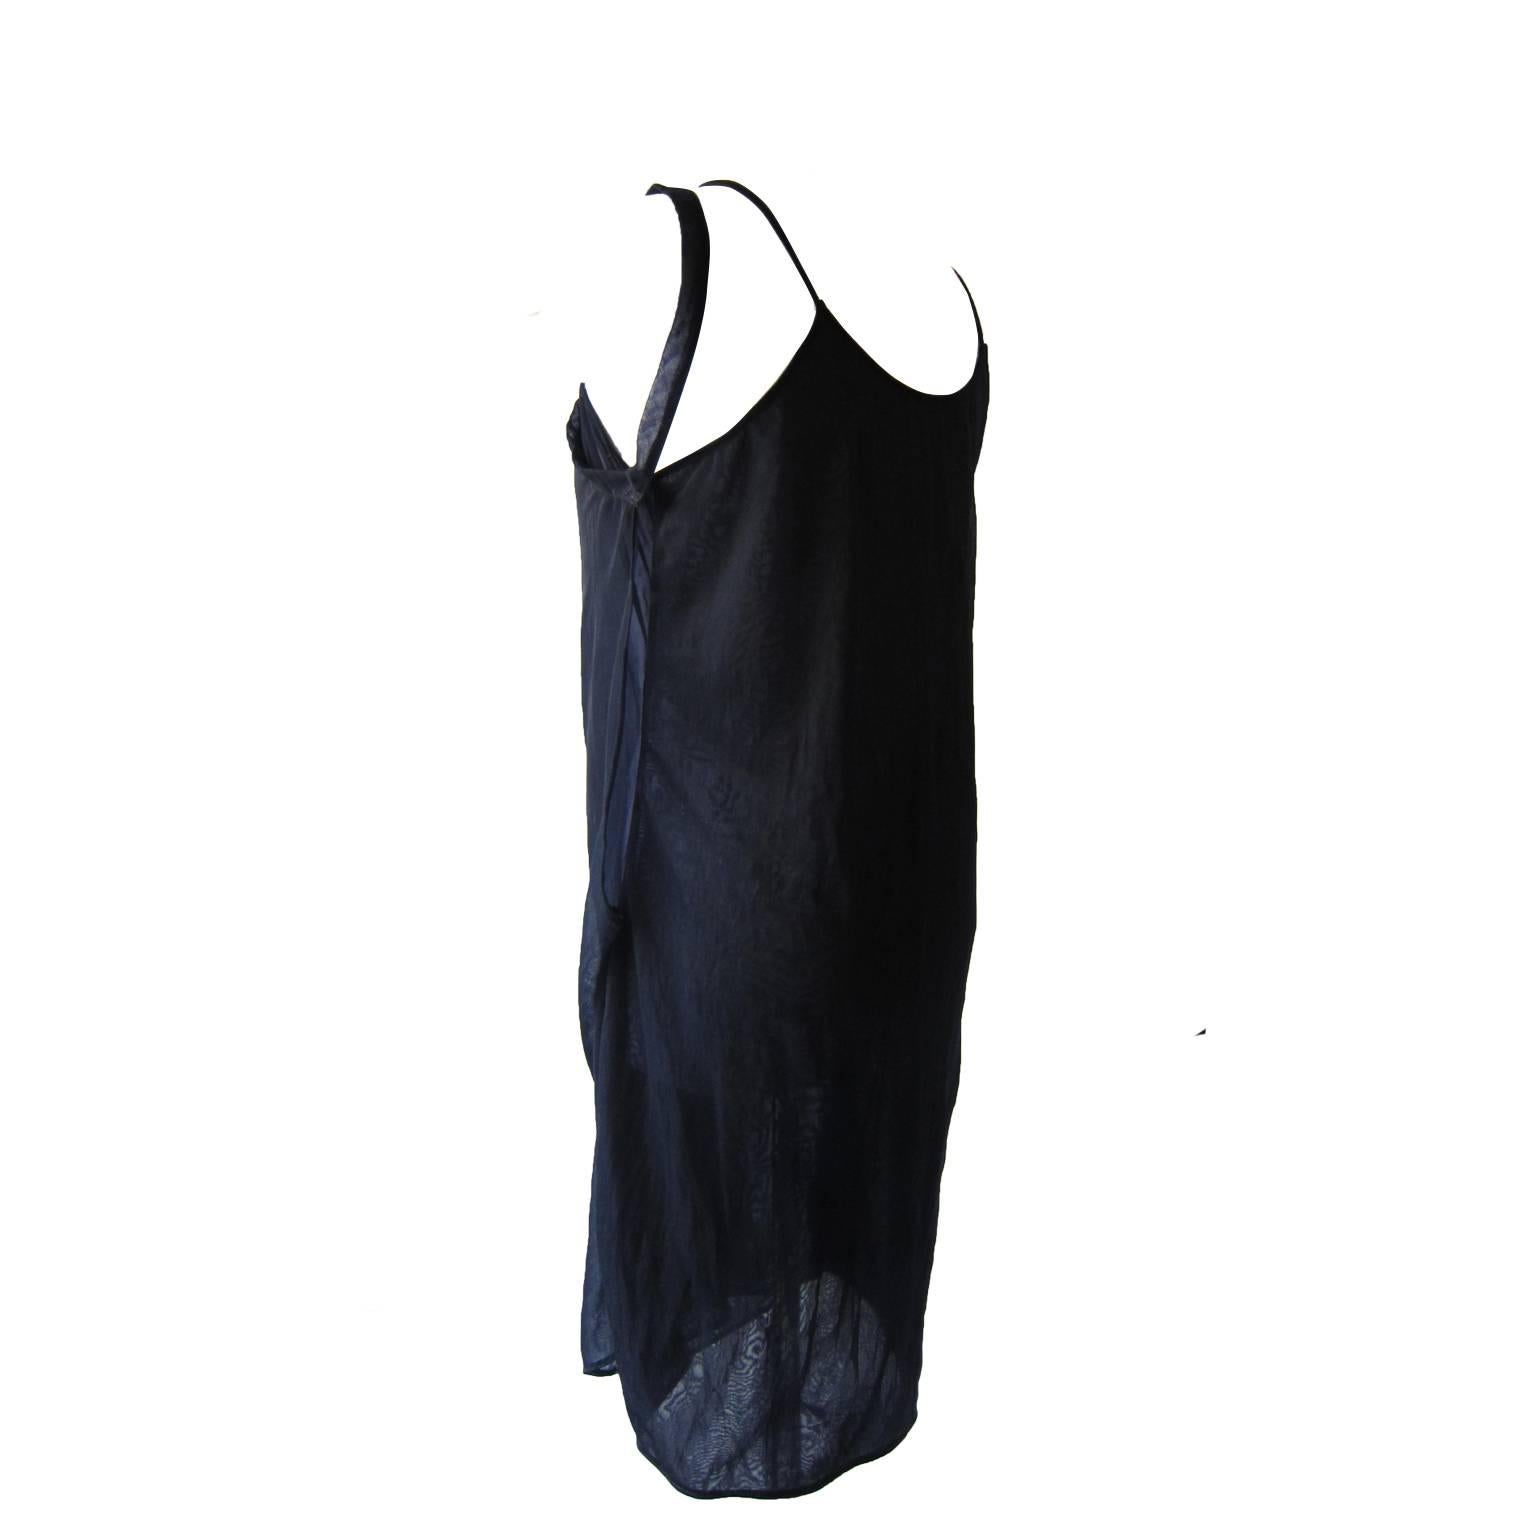 Black Helmut Lang Sheer Navy Layered Dress SS 1995 For Sale